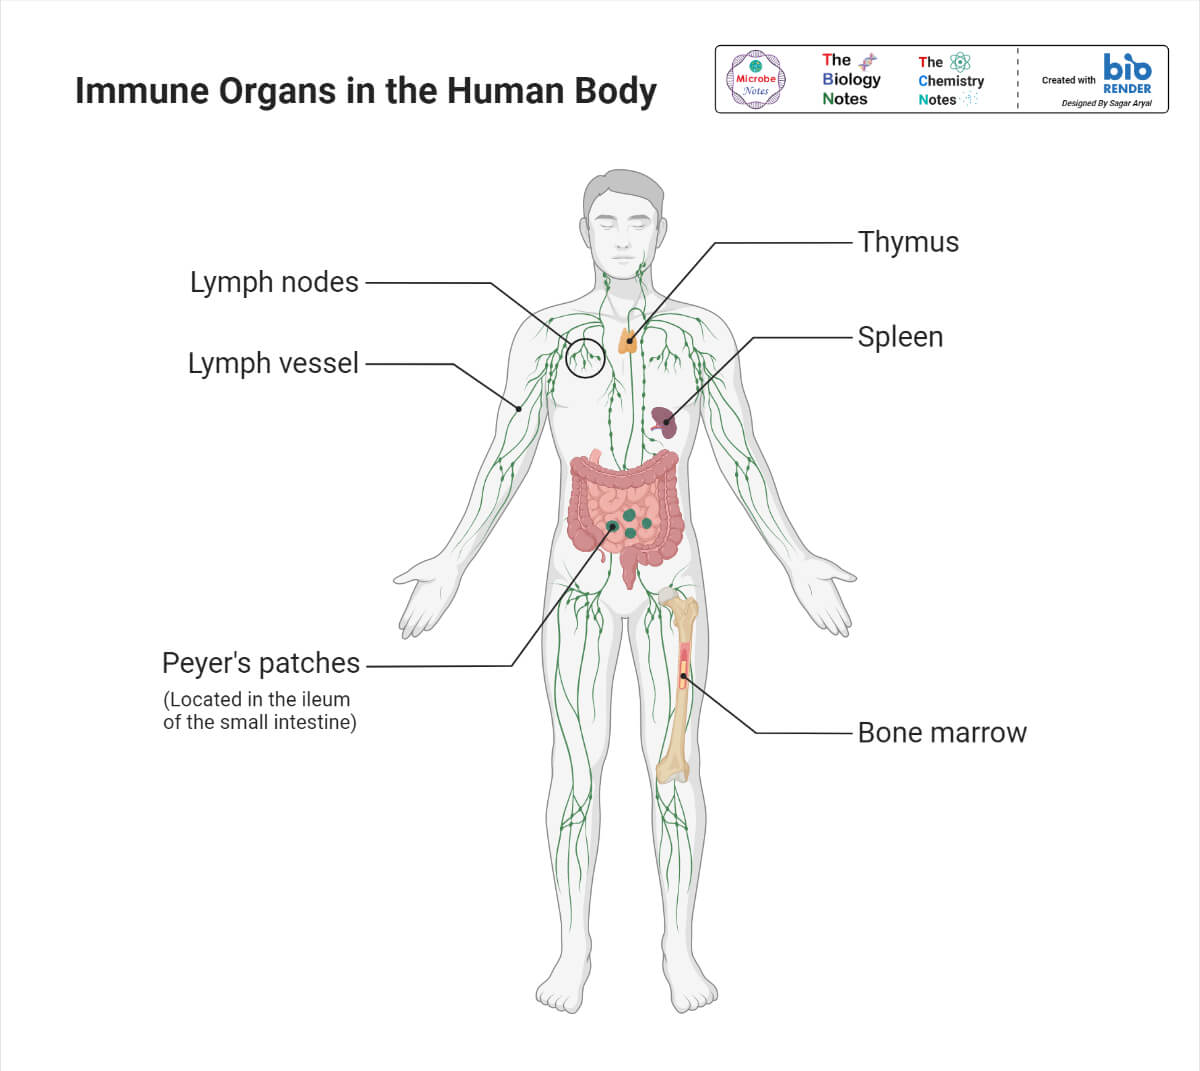 Immune Organs in the Human Body